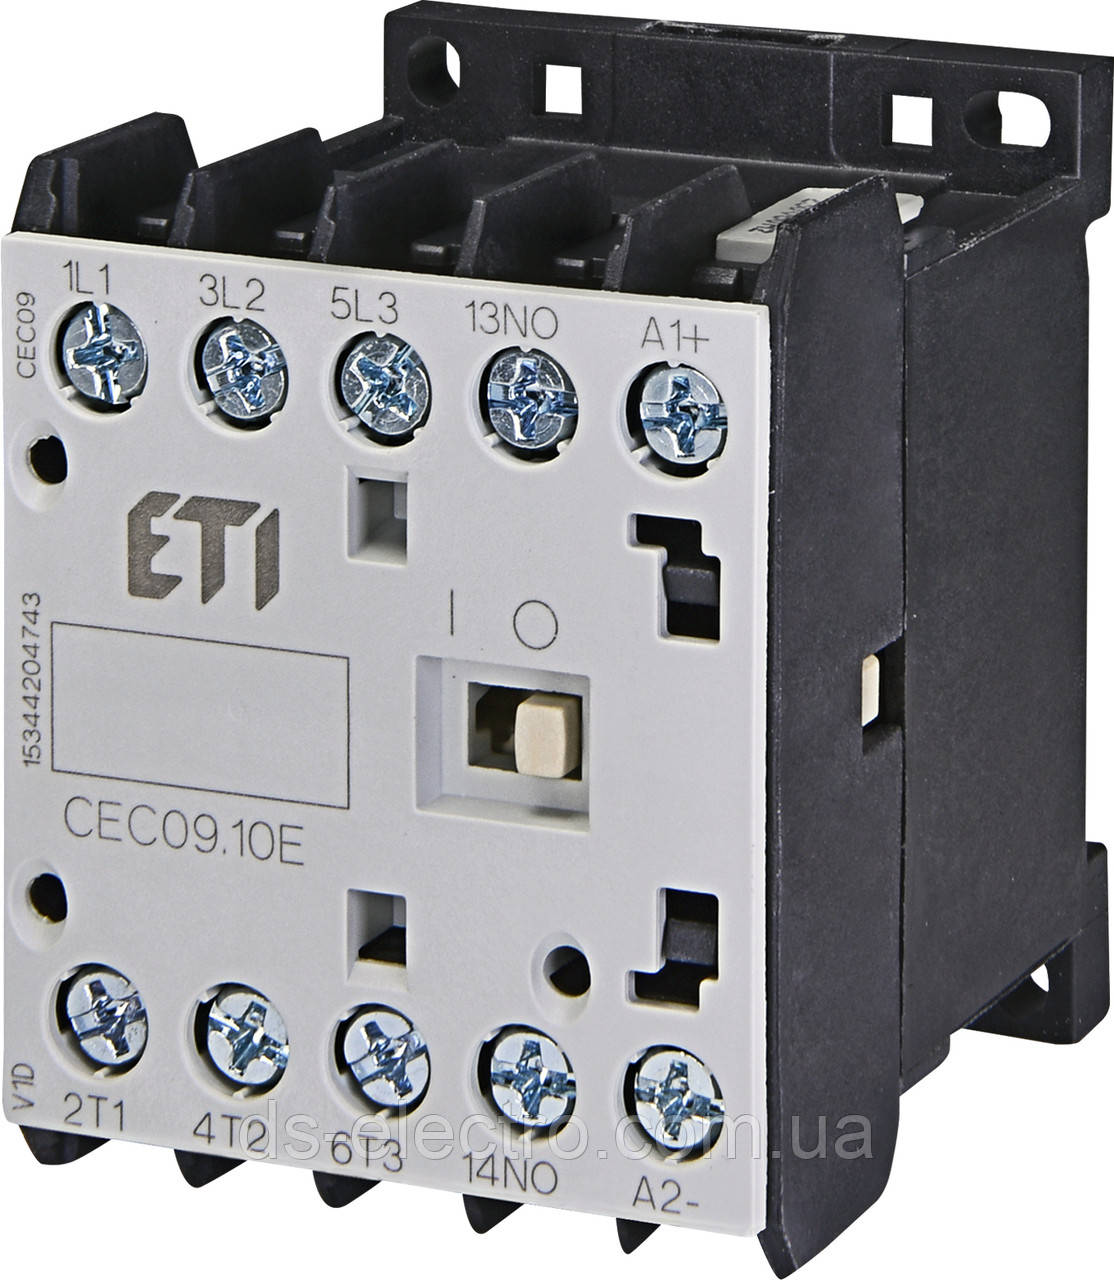 Контактор малогабаритний ETI, CEC, 230V AC, 4 кВт